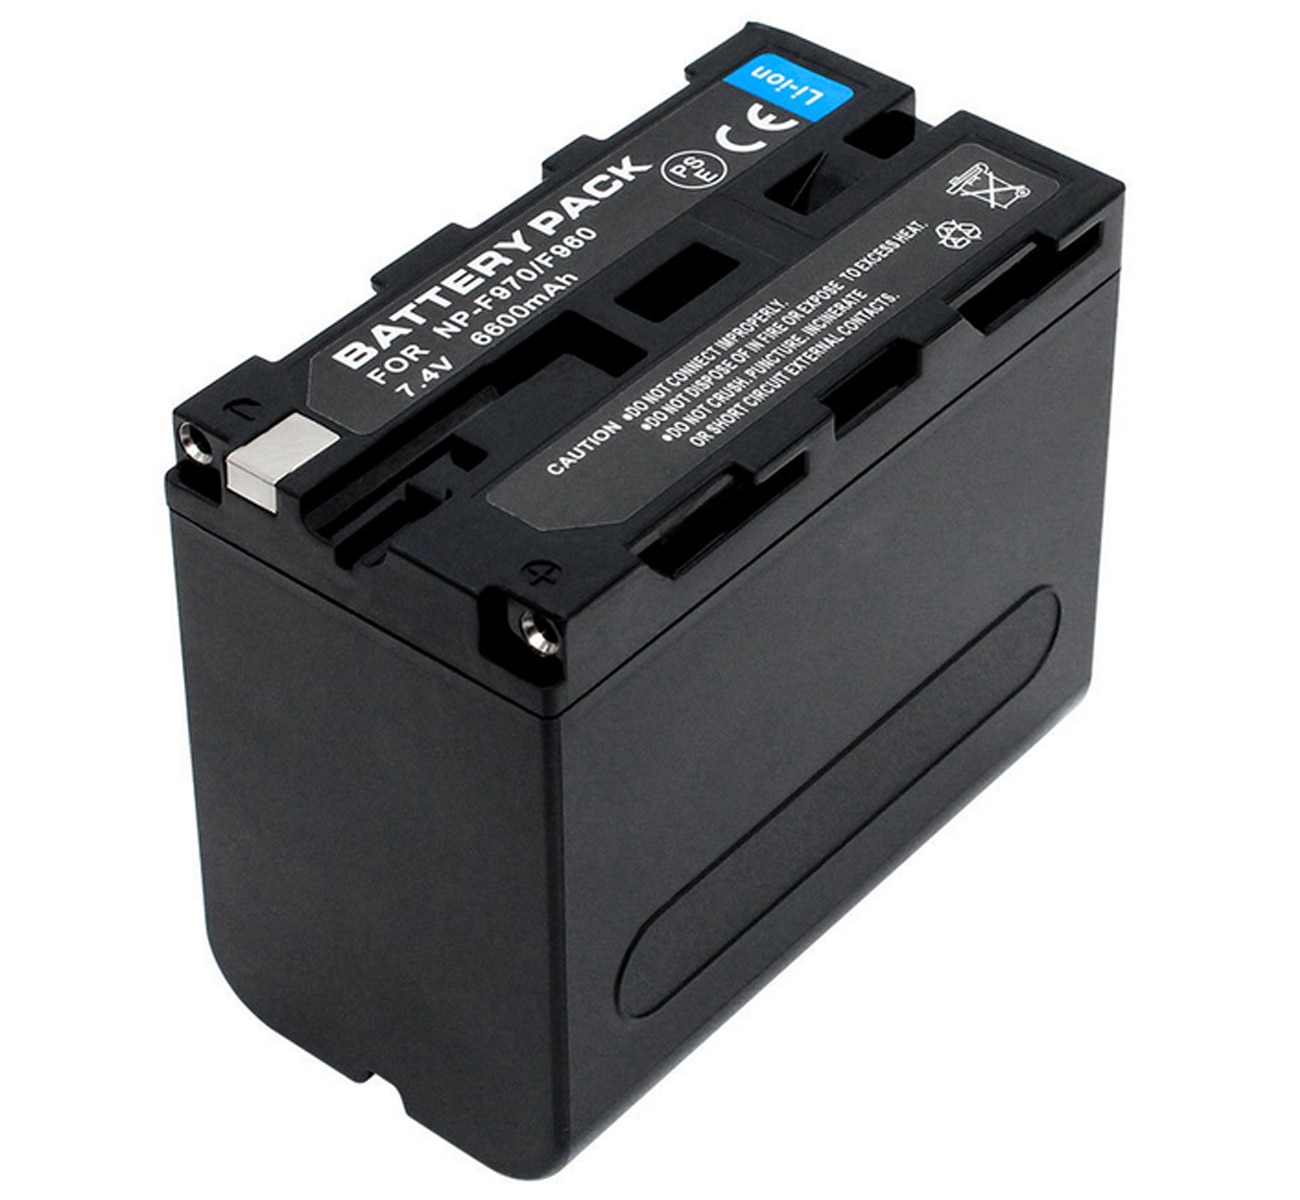 Batterij Pack Voor Sony NP-F930, NP-F950, NP-F950/B, NP-F960, NP-F970, NP-F 970, NPF970, 2NP-F970/B Infolithium L Serie